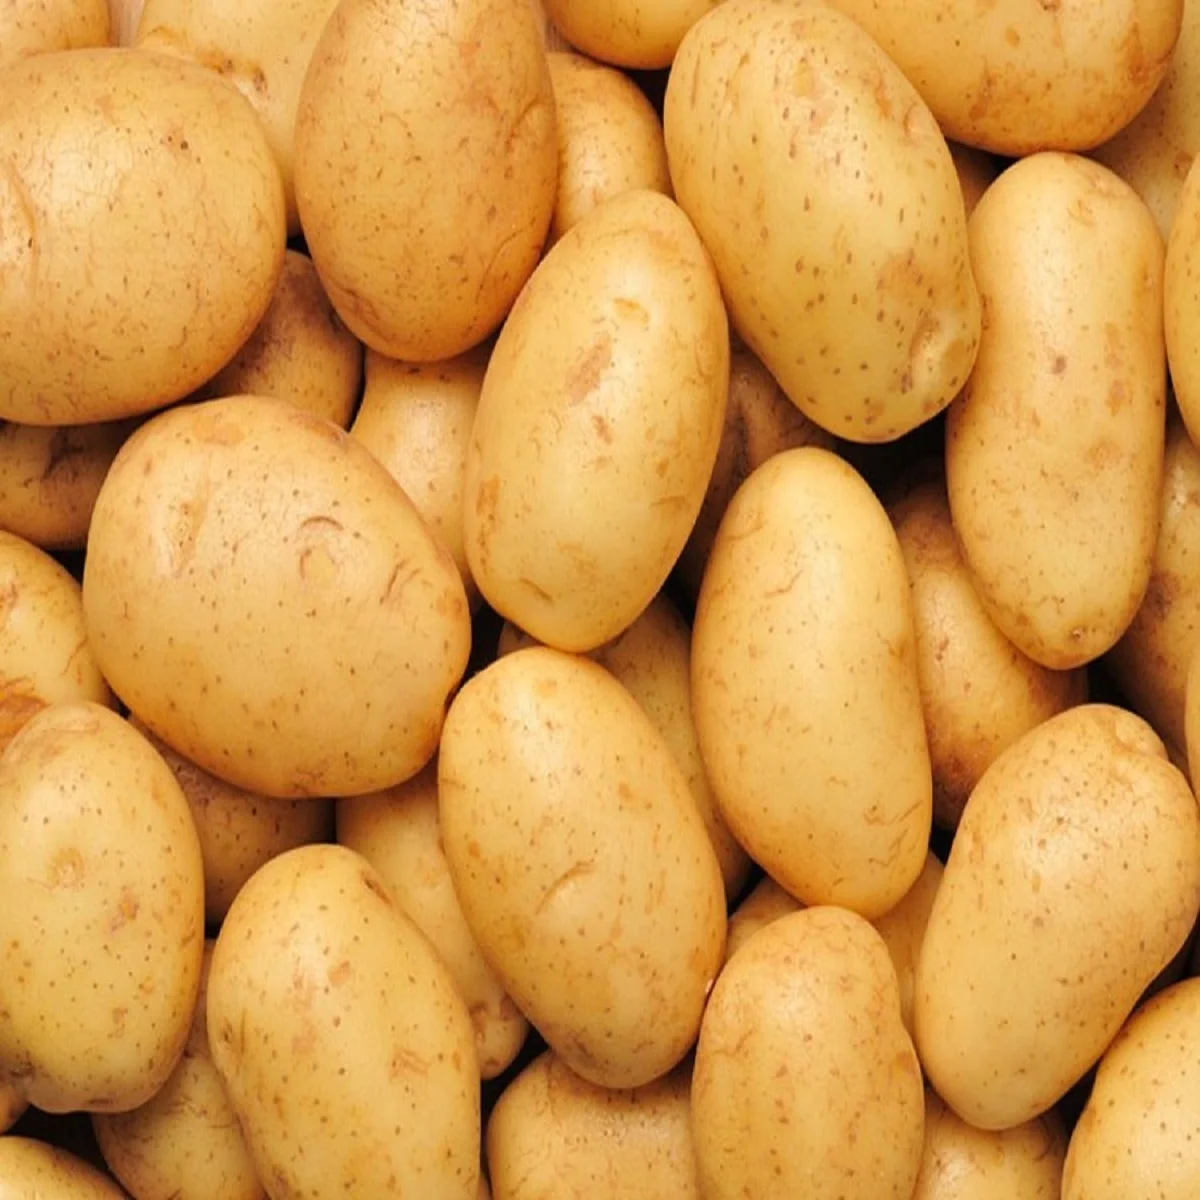 коломбо картофель характеристика фото